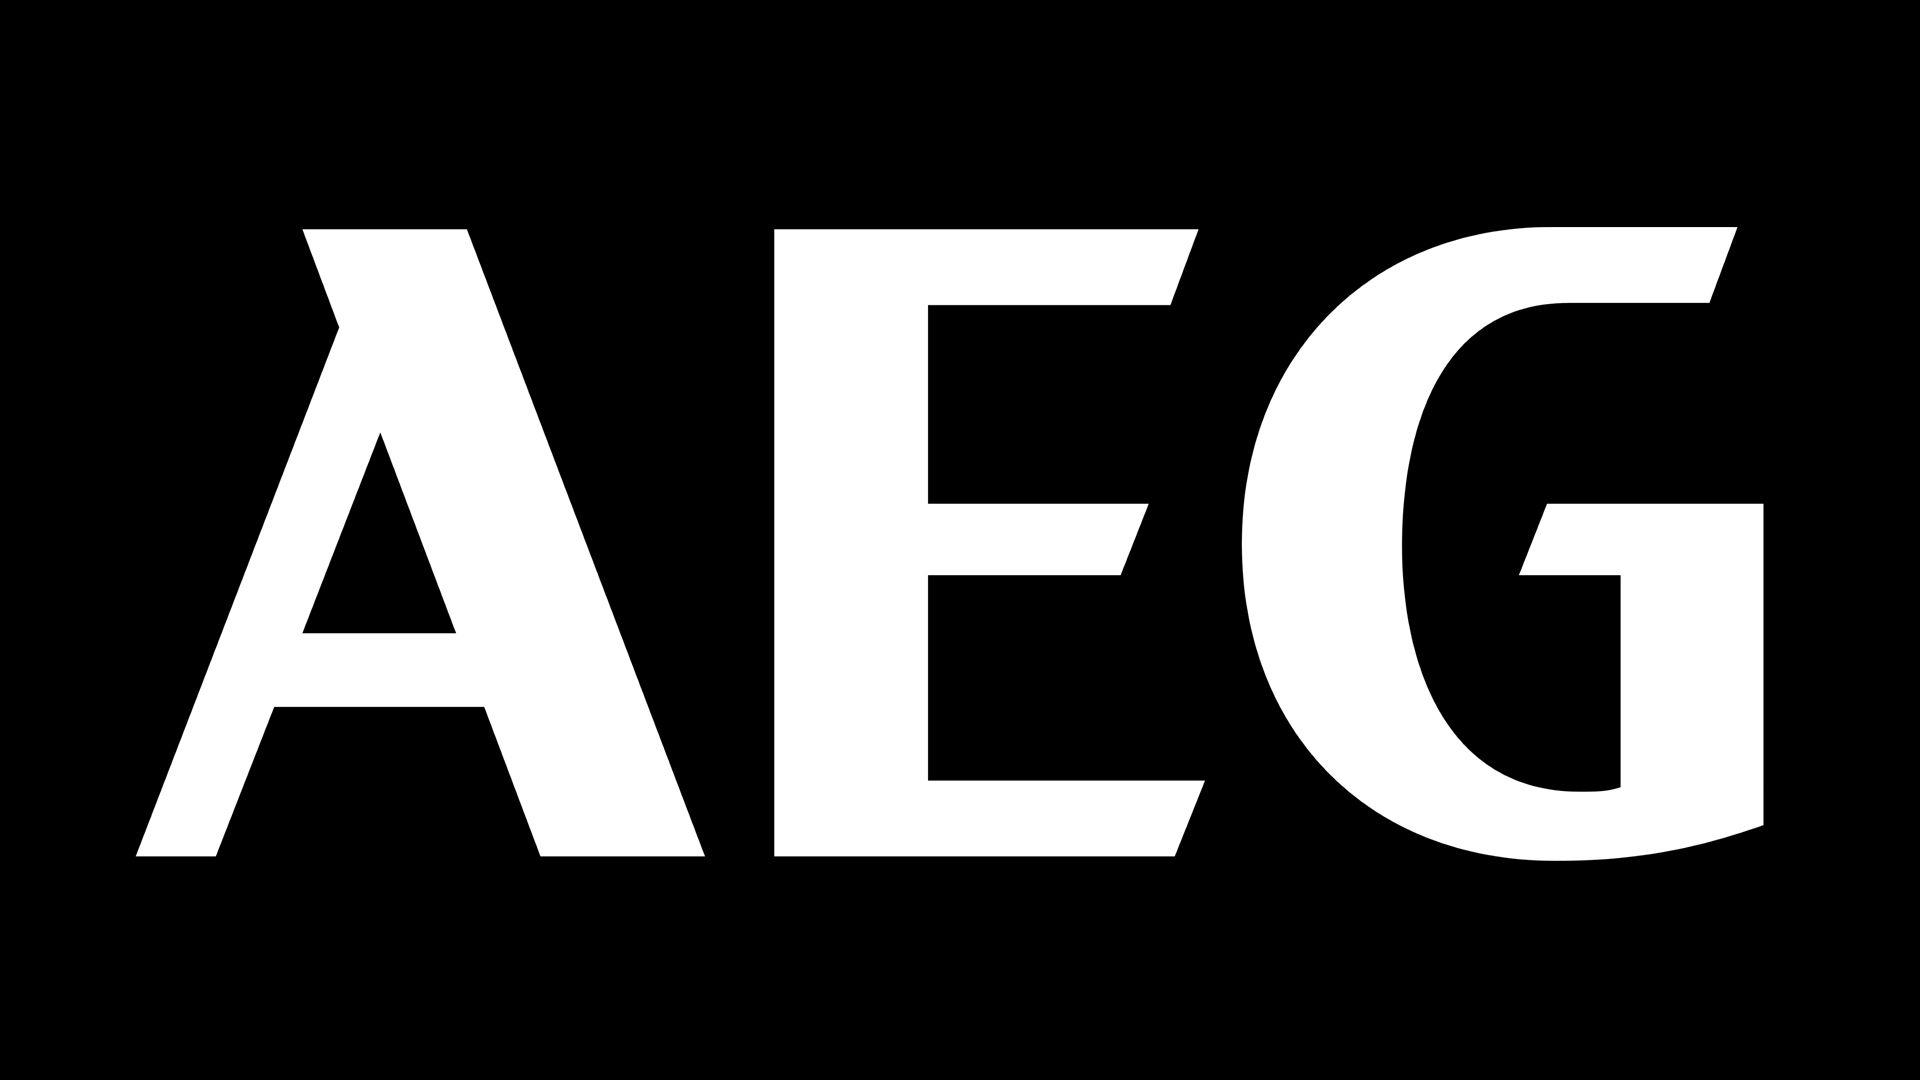 First White Logo - AEG Logo, AEG Symbol, Meaning, History and Evolution